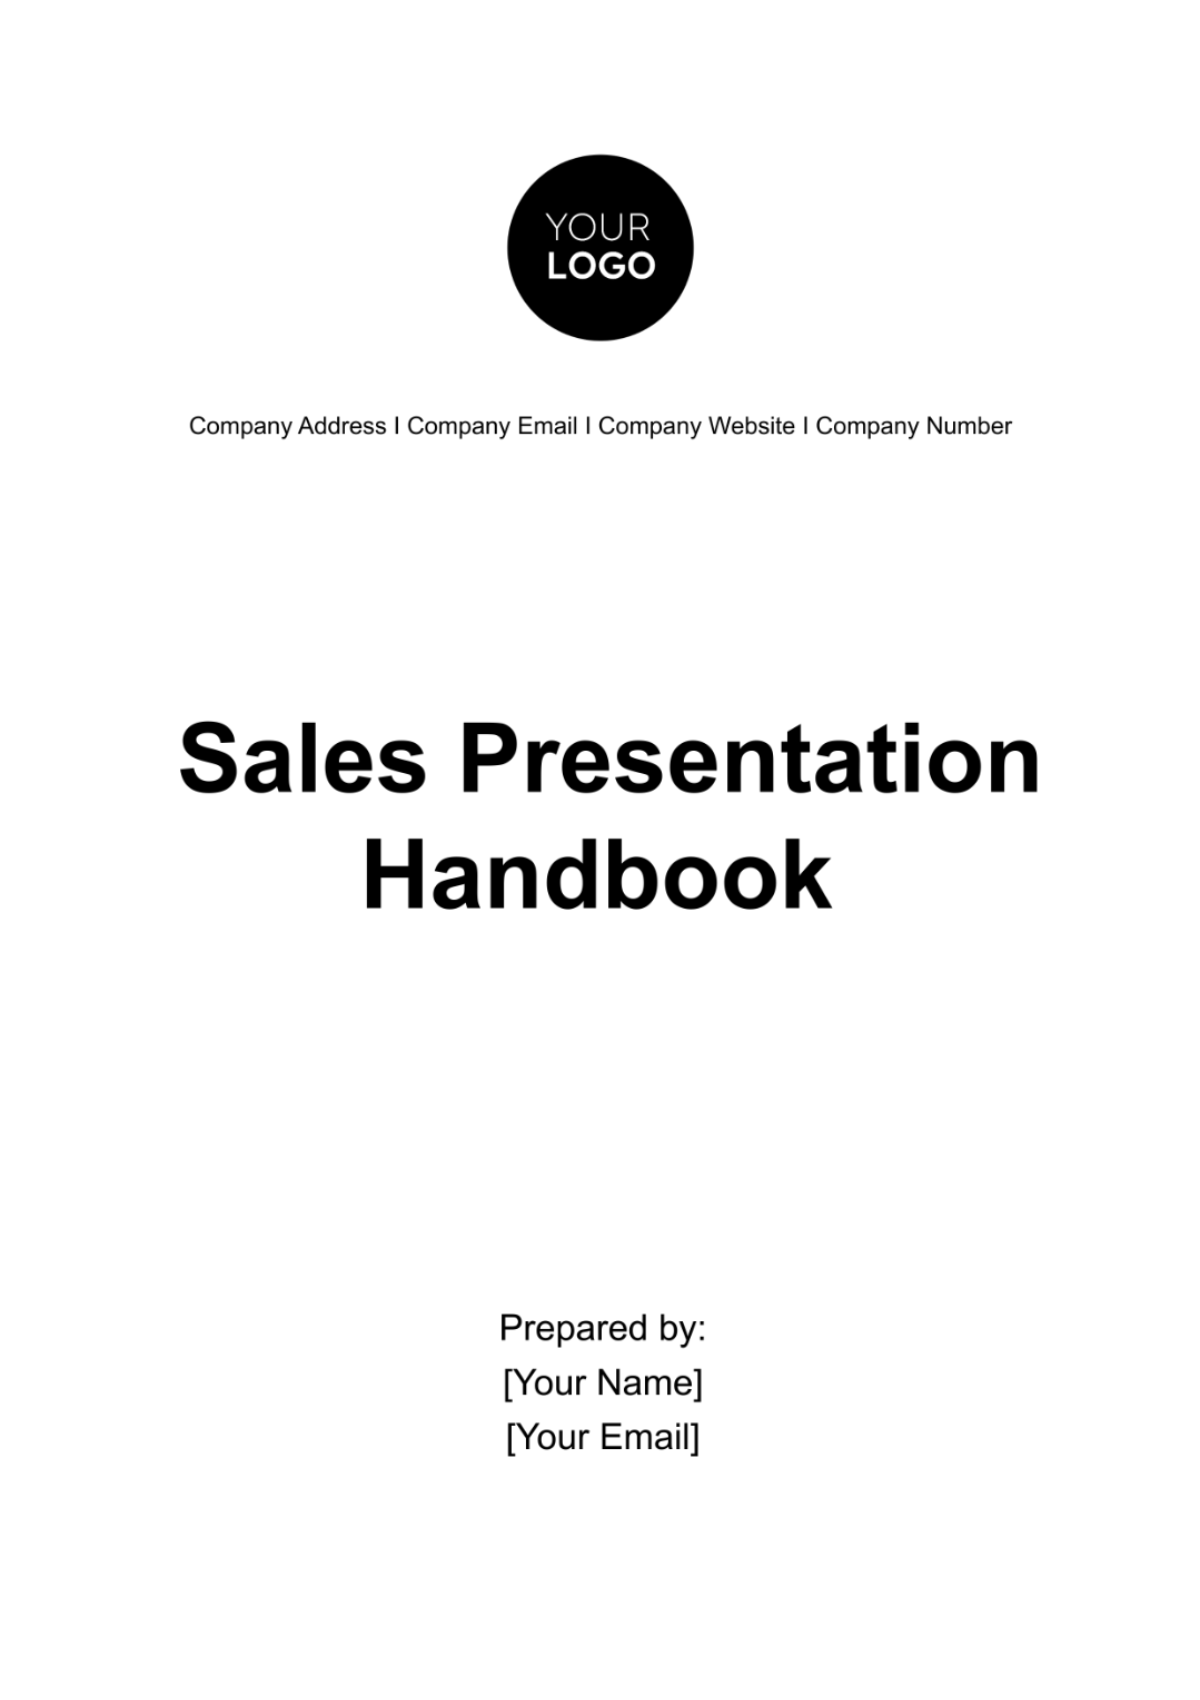 Sales Presentation Handbook Template